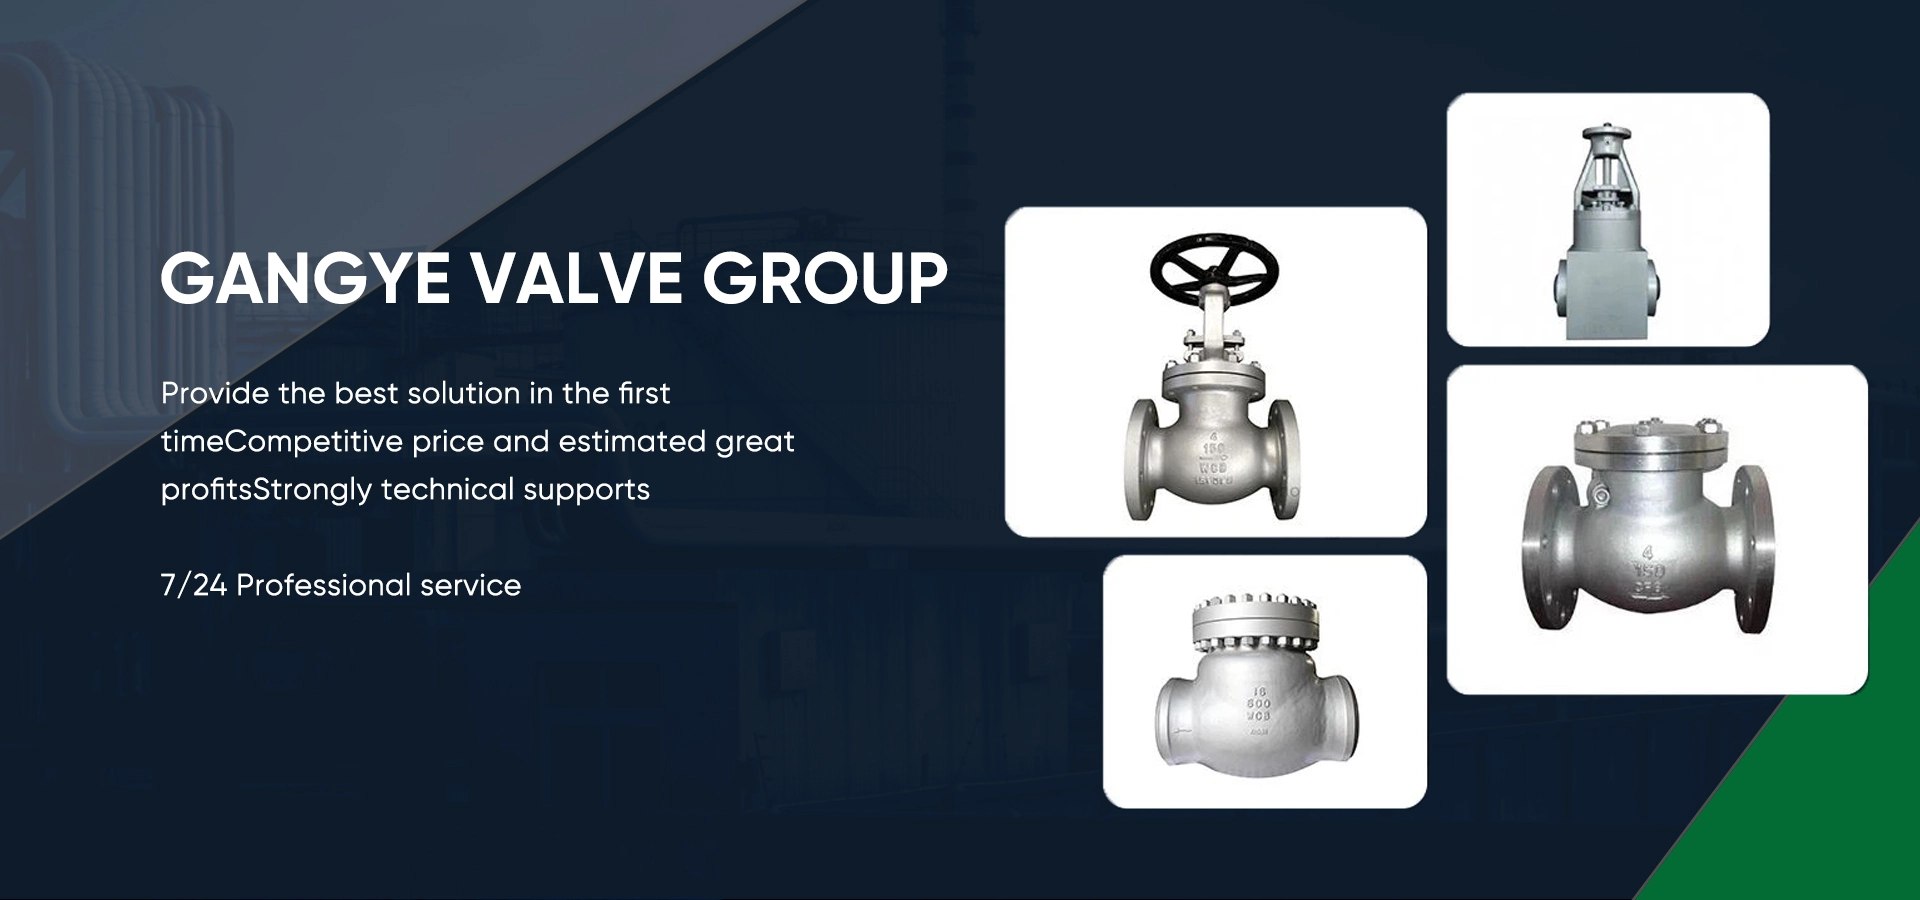 Gangye Valve Group